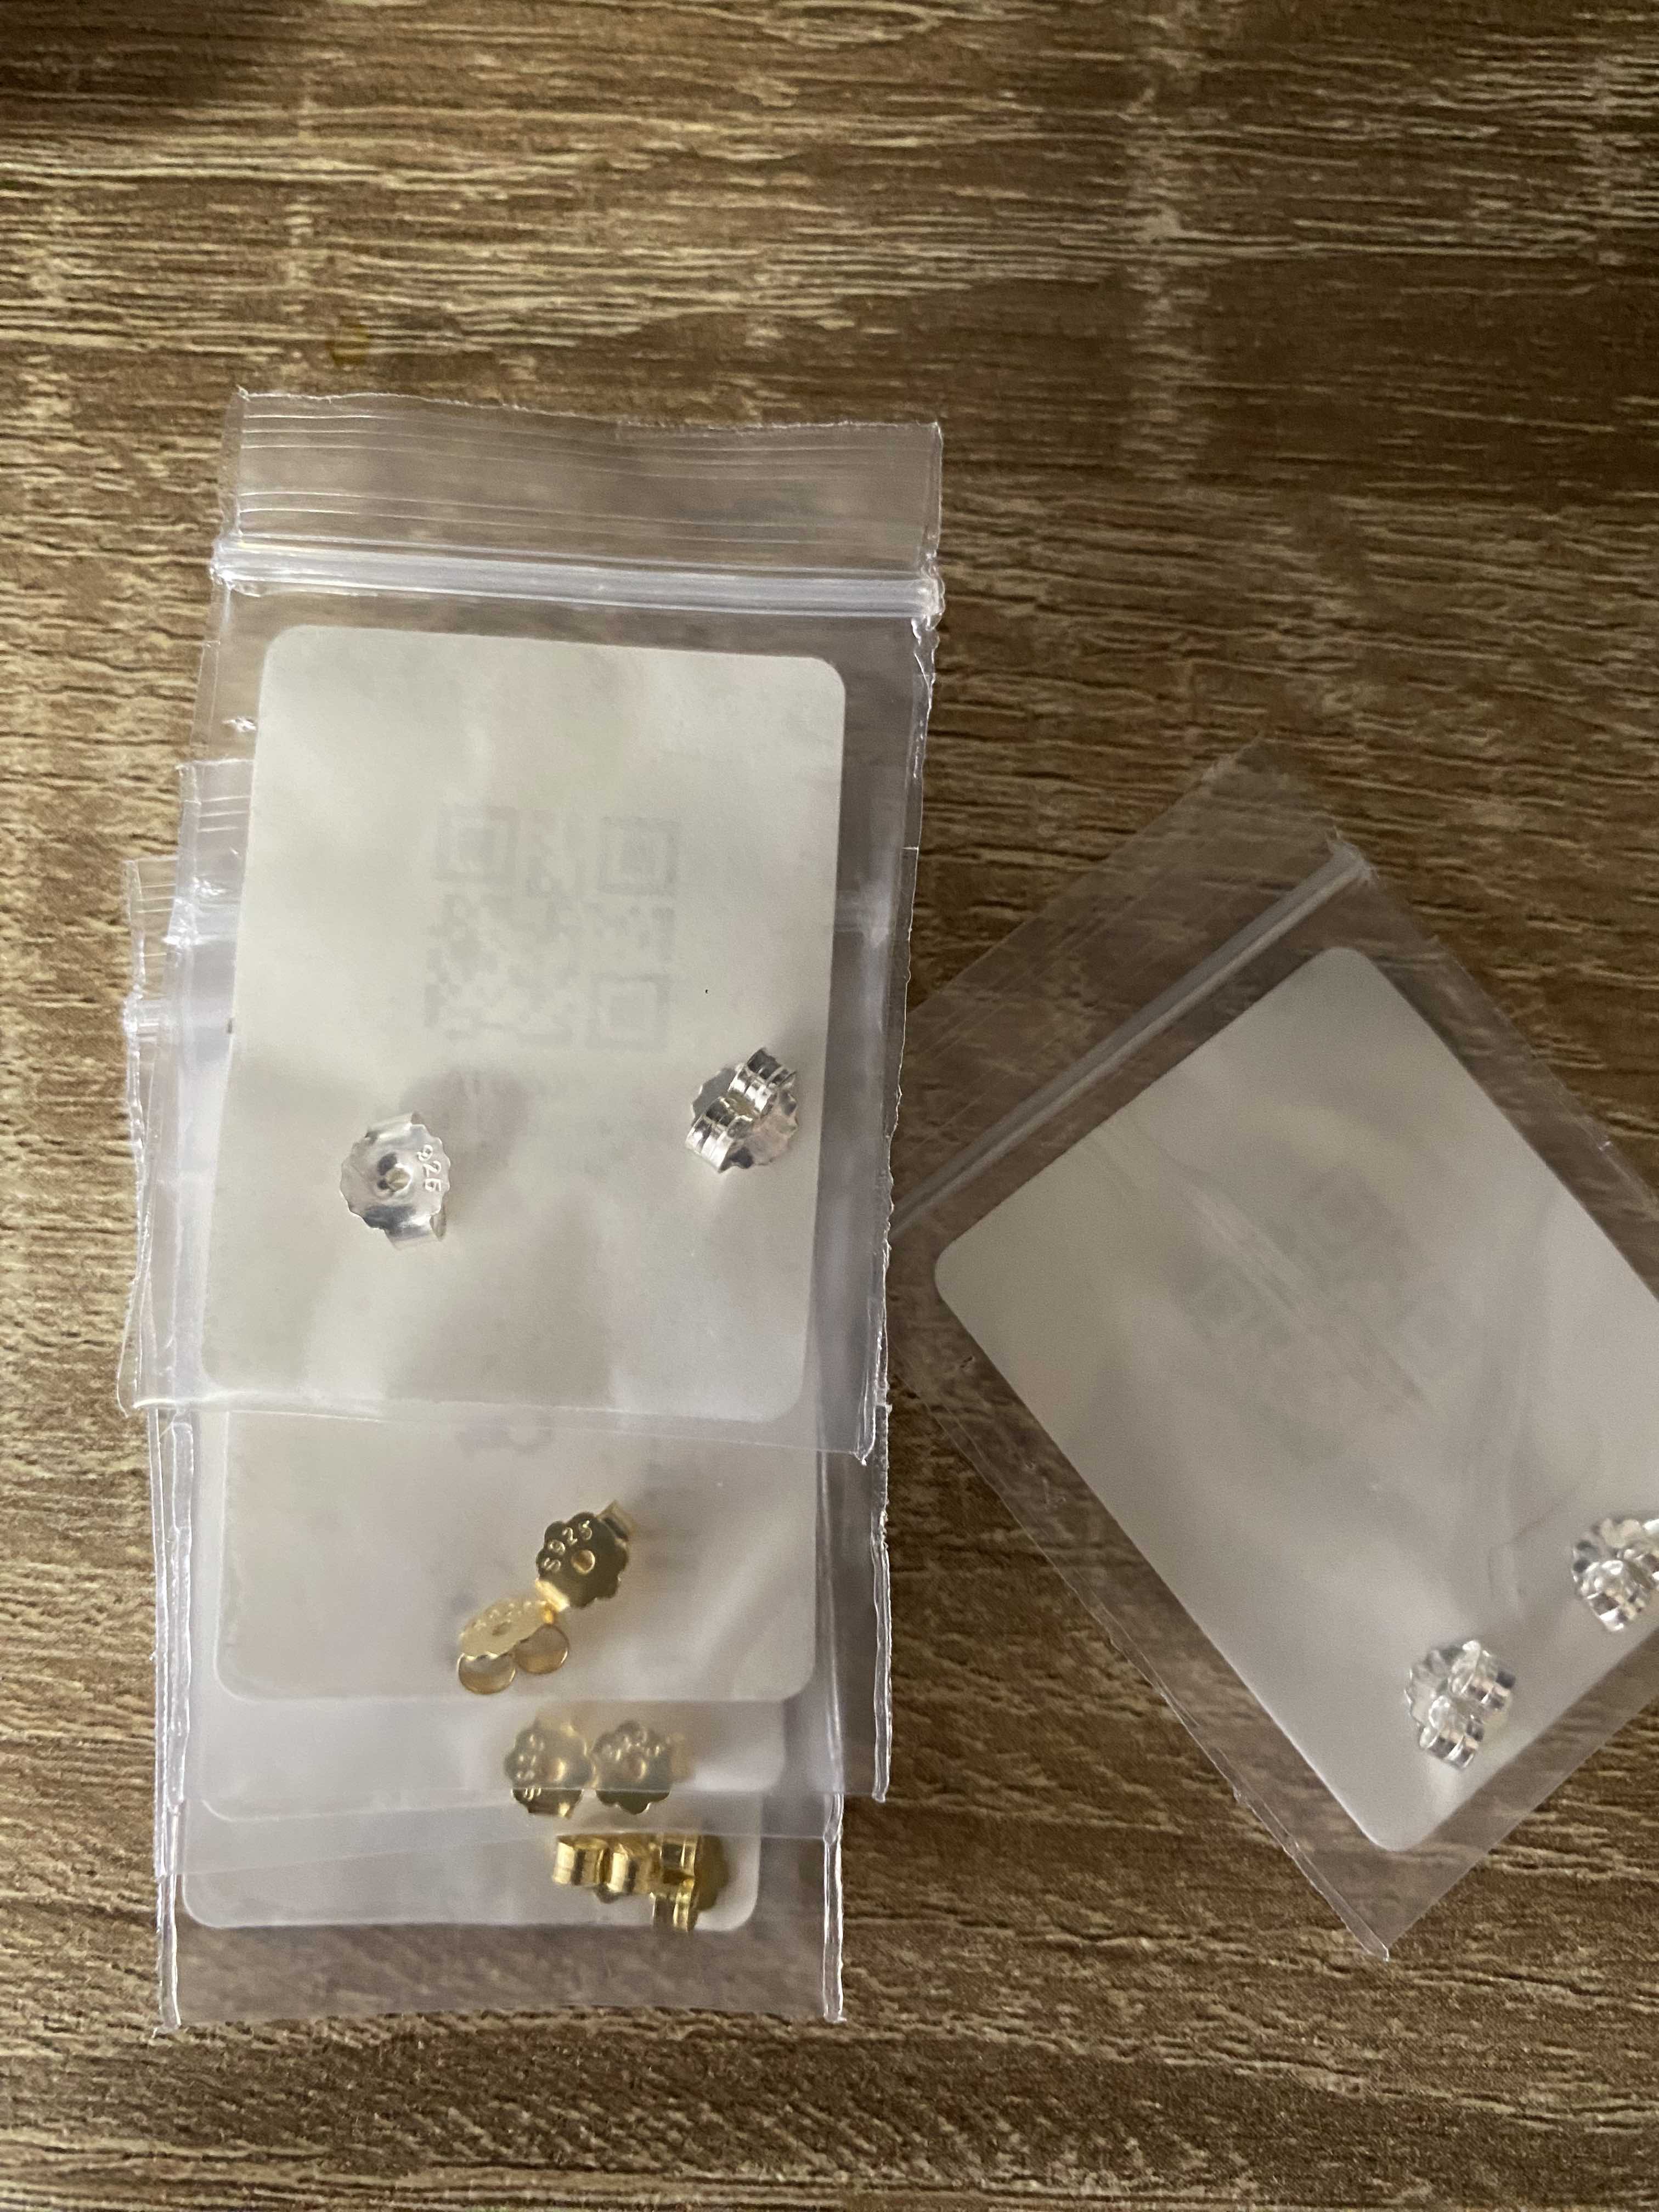 One Piece Solid Sterling Silver Earring Findings - Earring Backing -  Butterfly Backing (SS018) - AliExpress